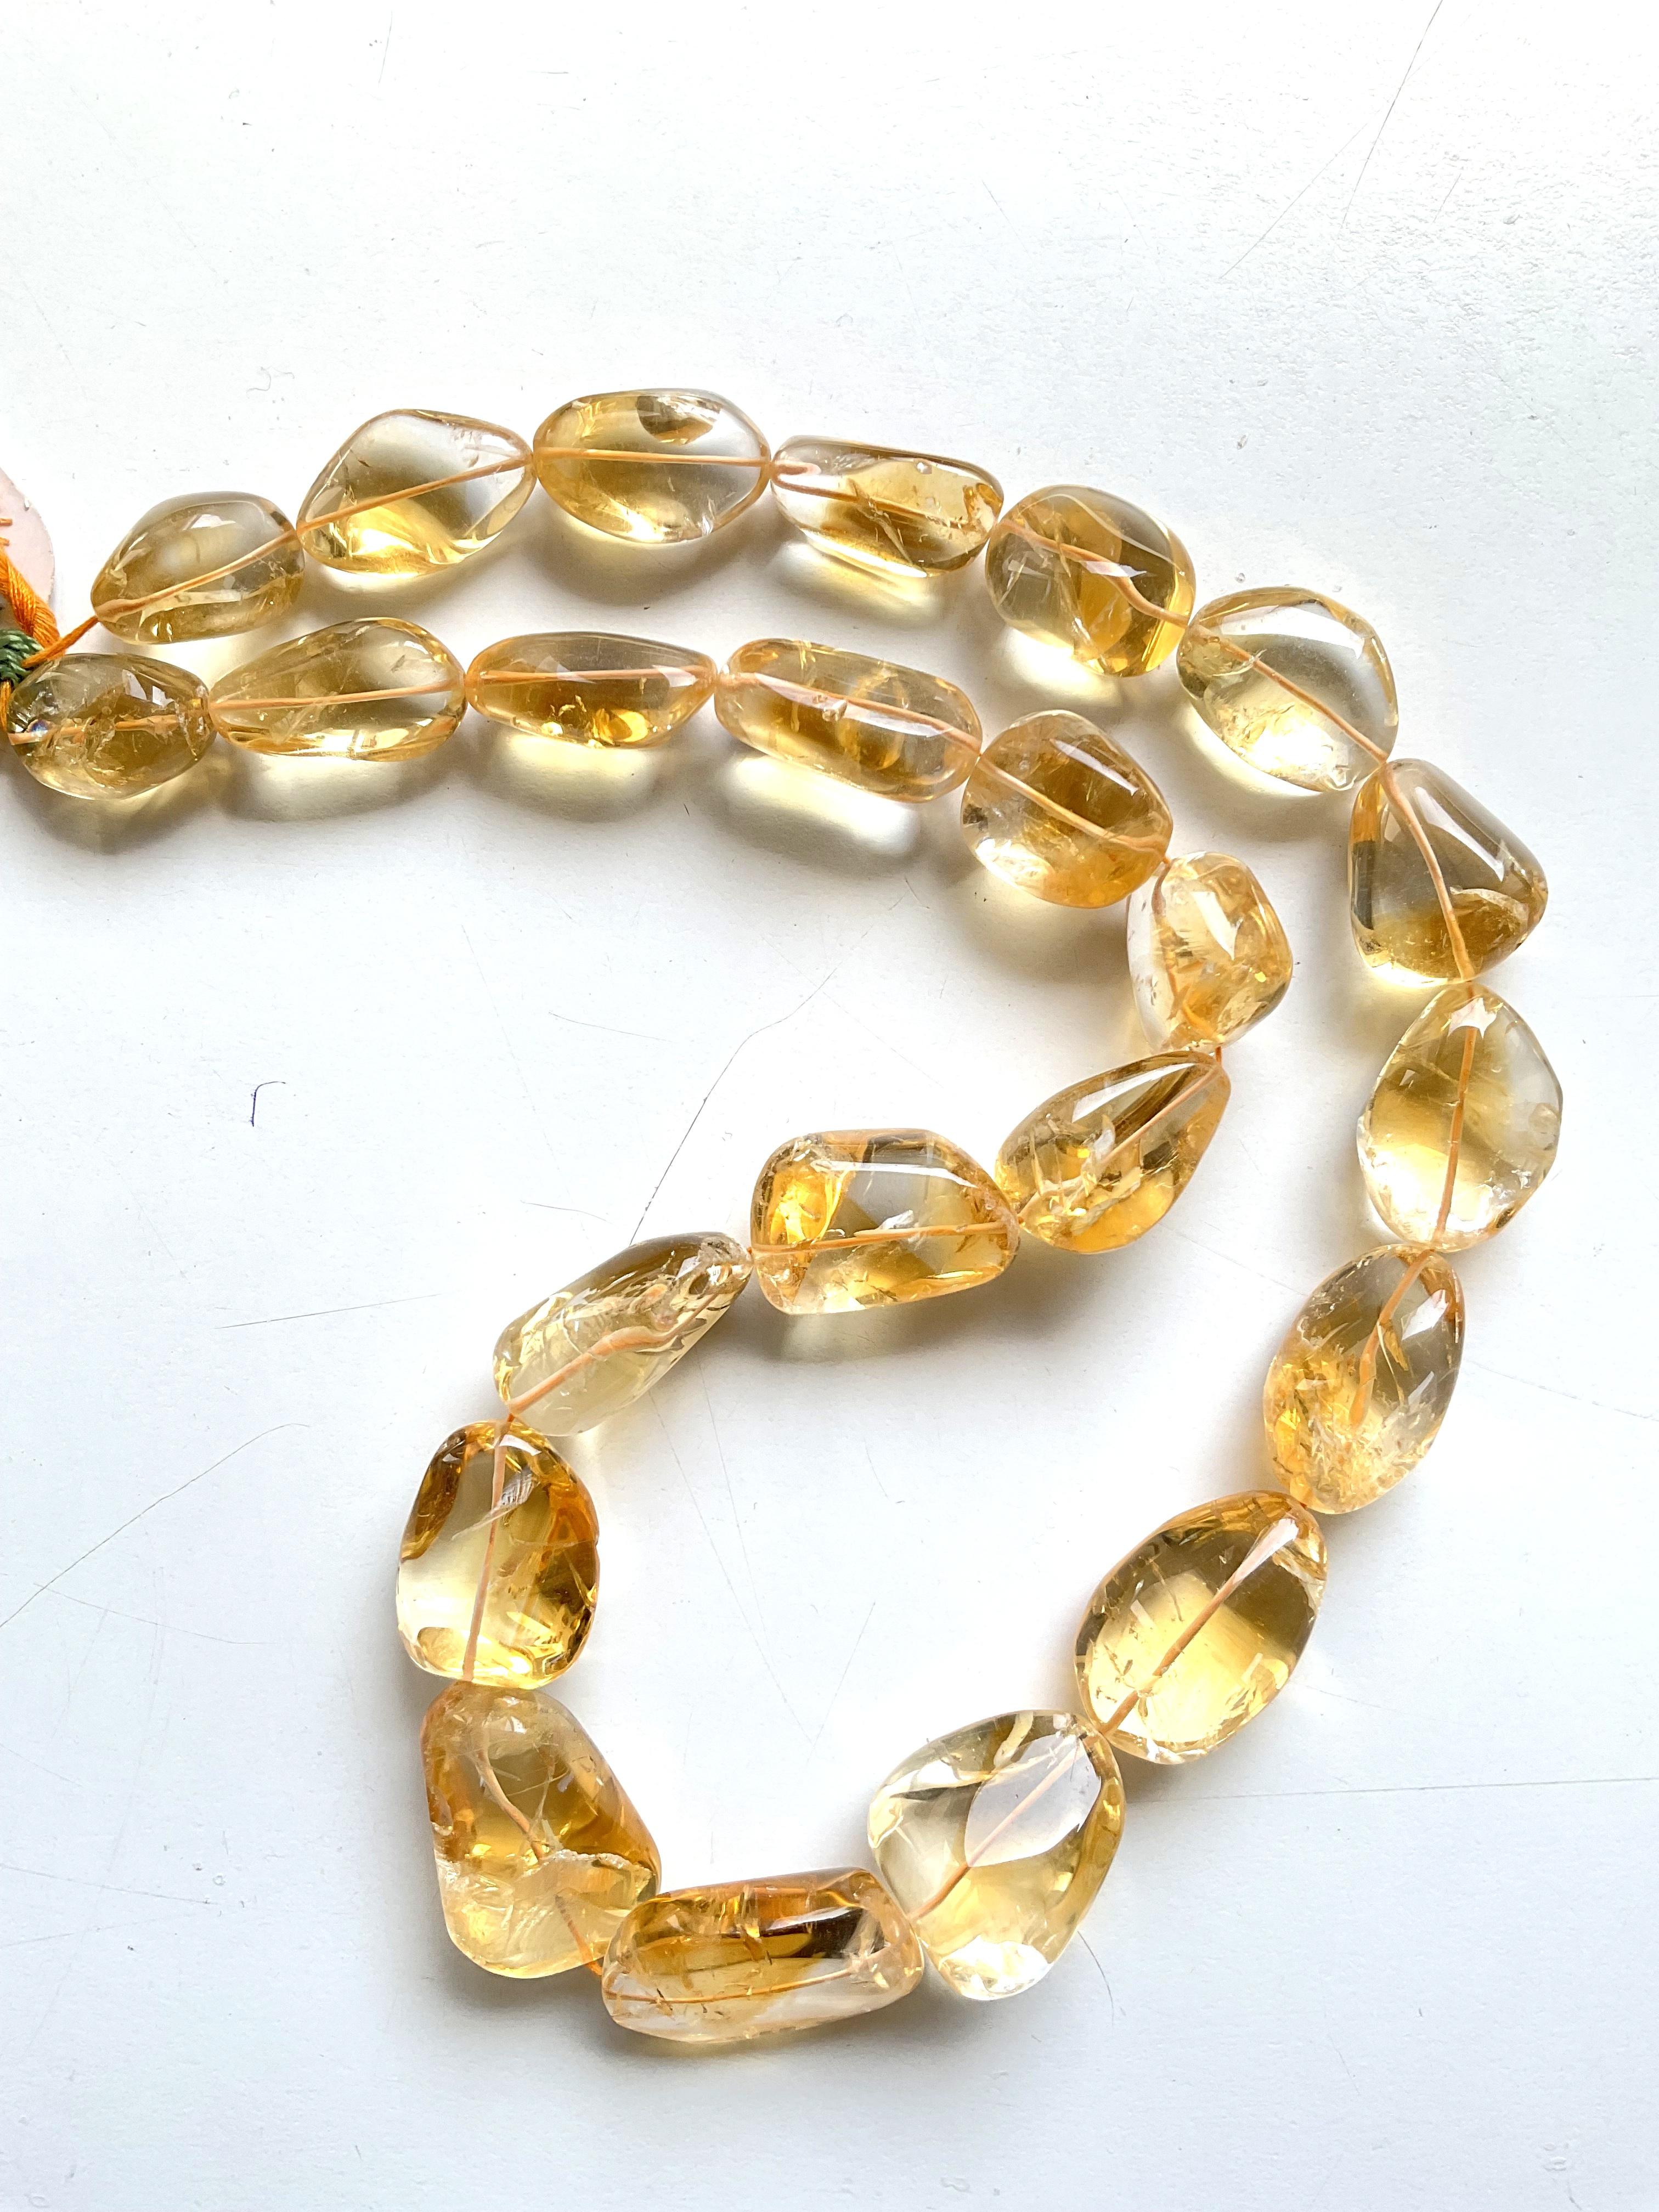 1157.00 carats big size citrine plain tumbled natural gemstone necklace For Sale 2